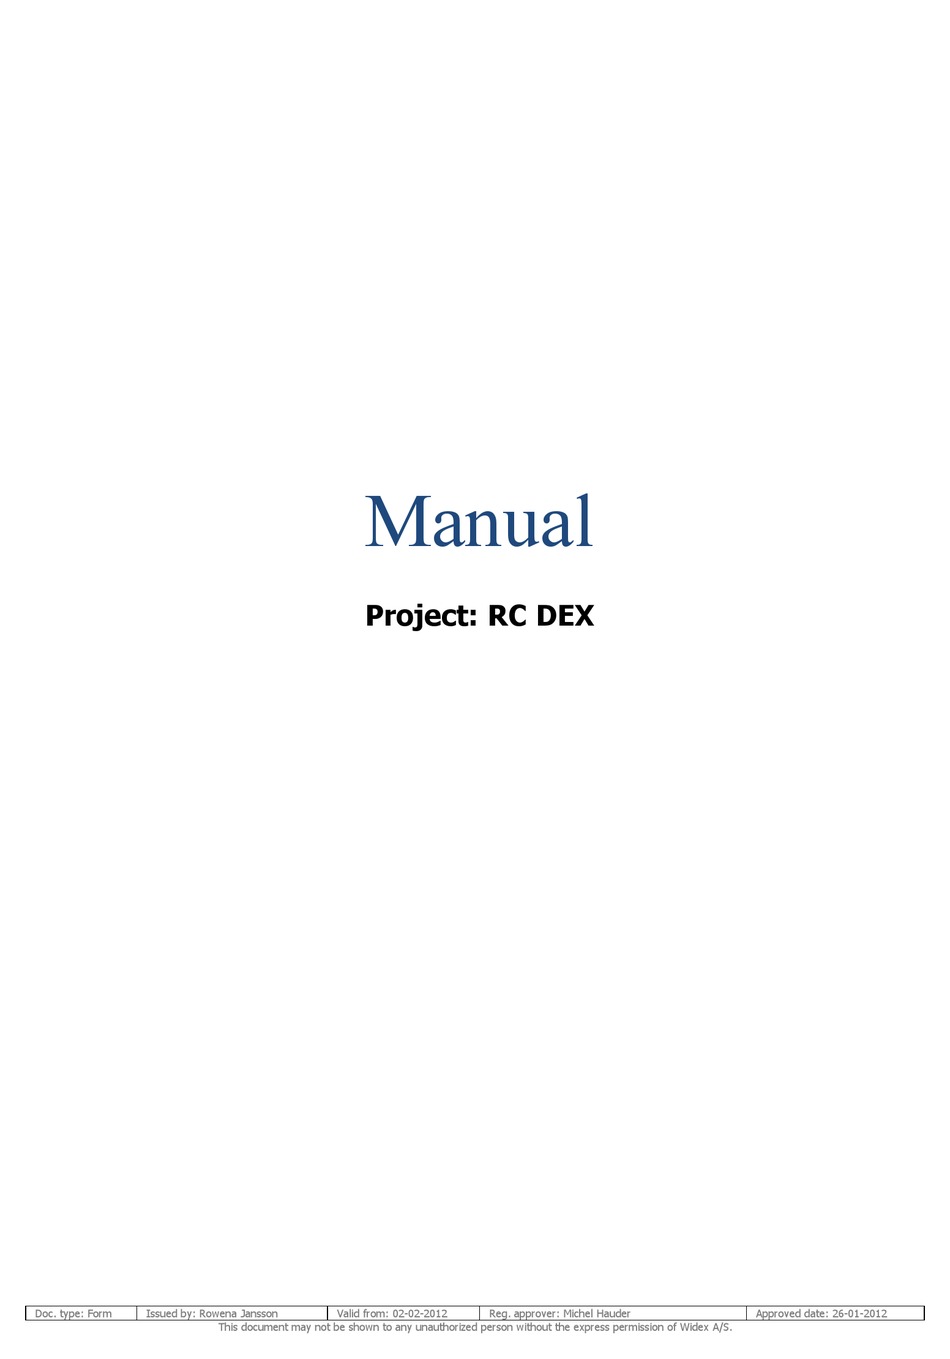 WIDEX RC DEX REMOTE CONTROL MANUAL | ManualsLib